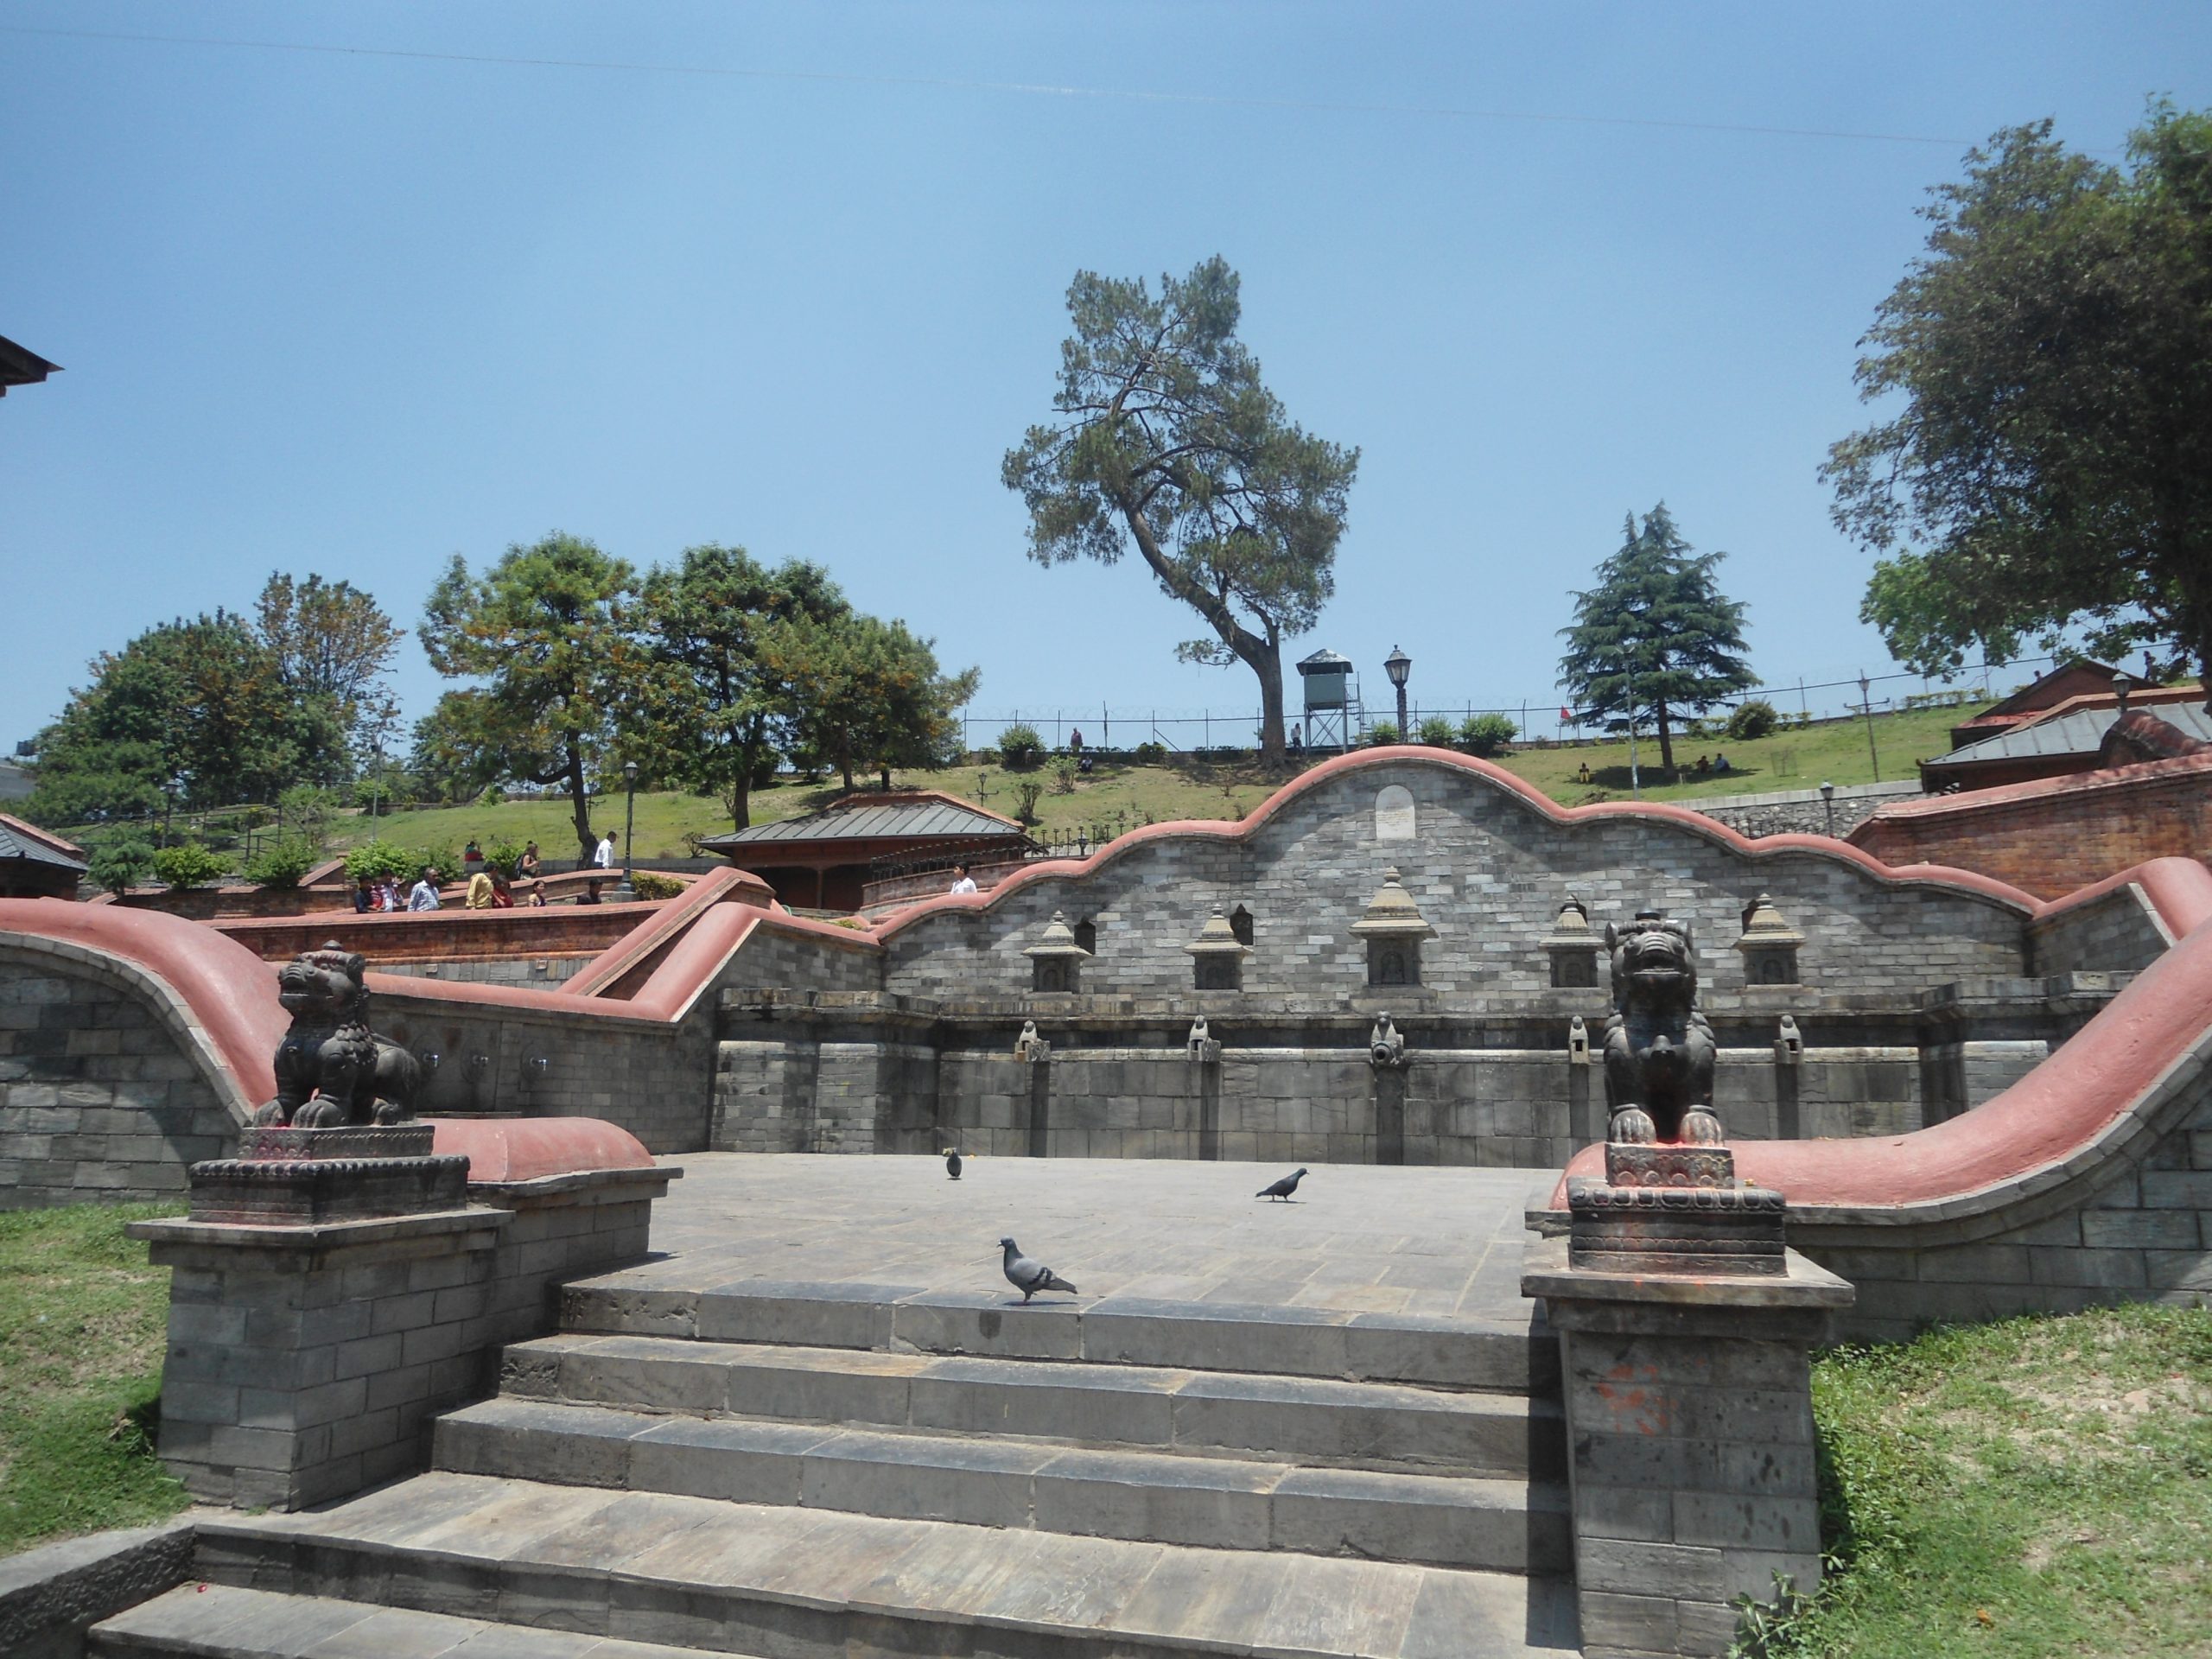 A public space in Kathmandu